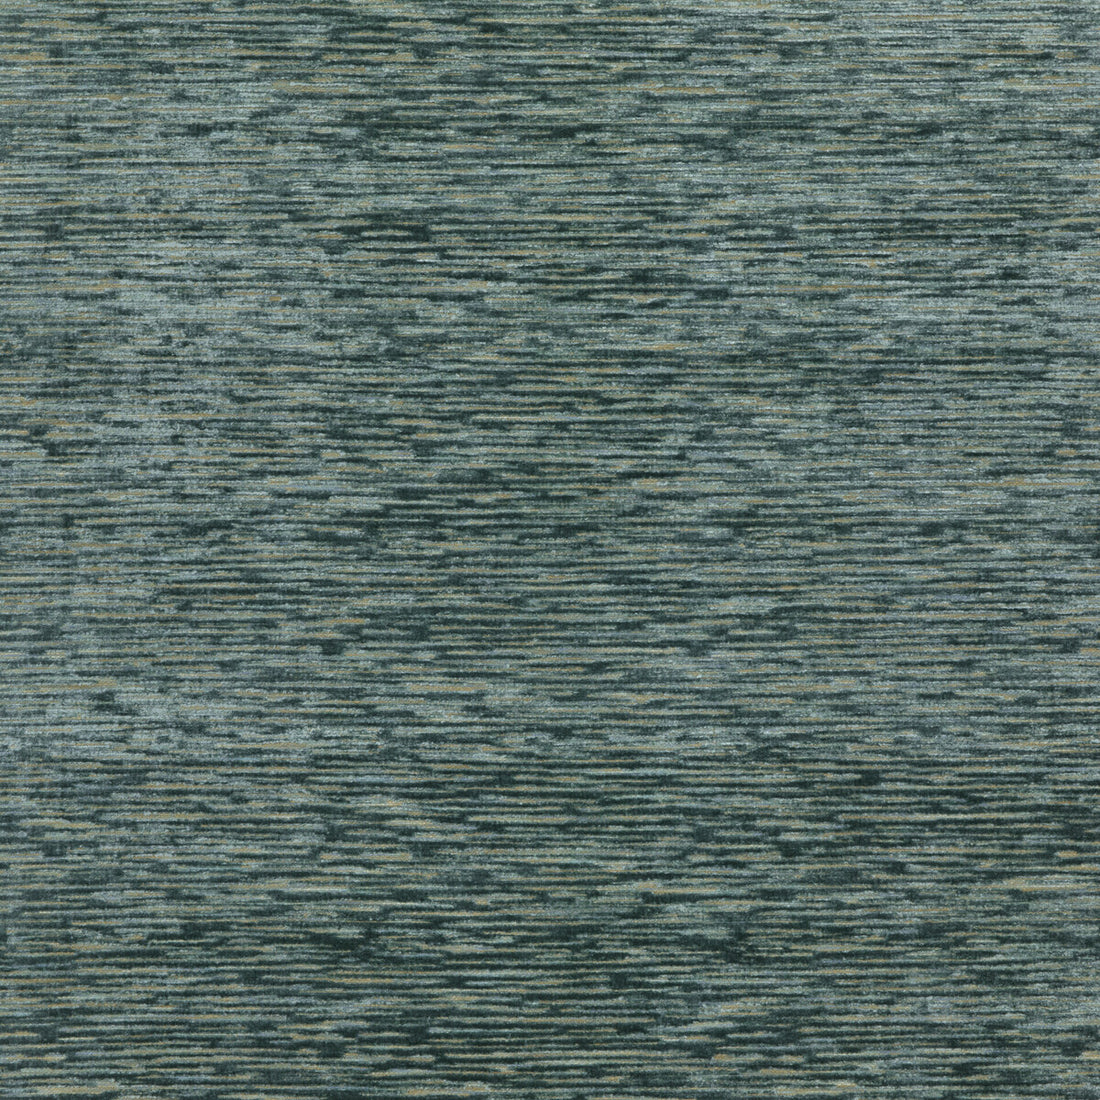 Keswick Velvet fabric in aqua color - pattern BF10760.725.0 - by G P &amp; J Baker in the Keswick Velvets collection